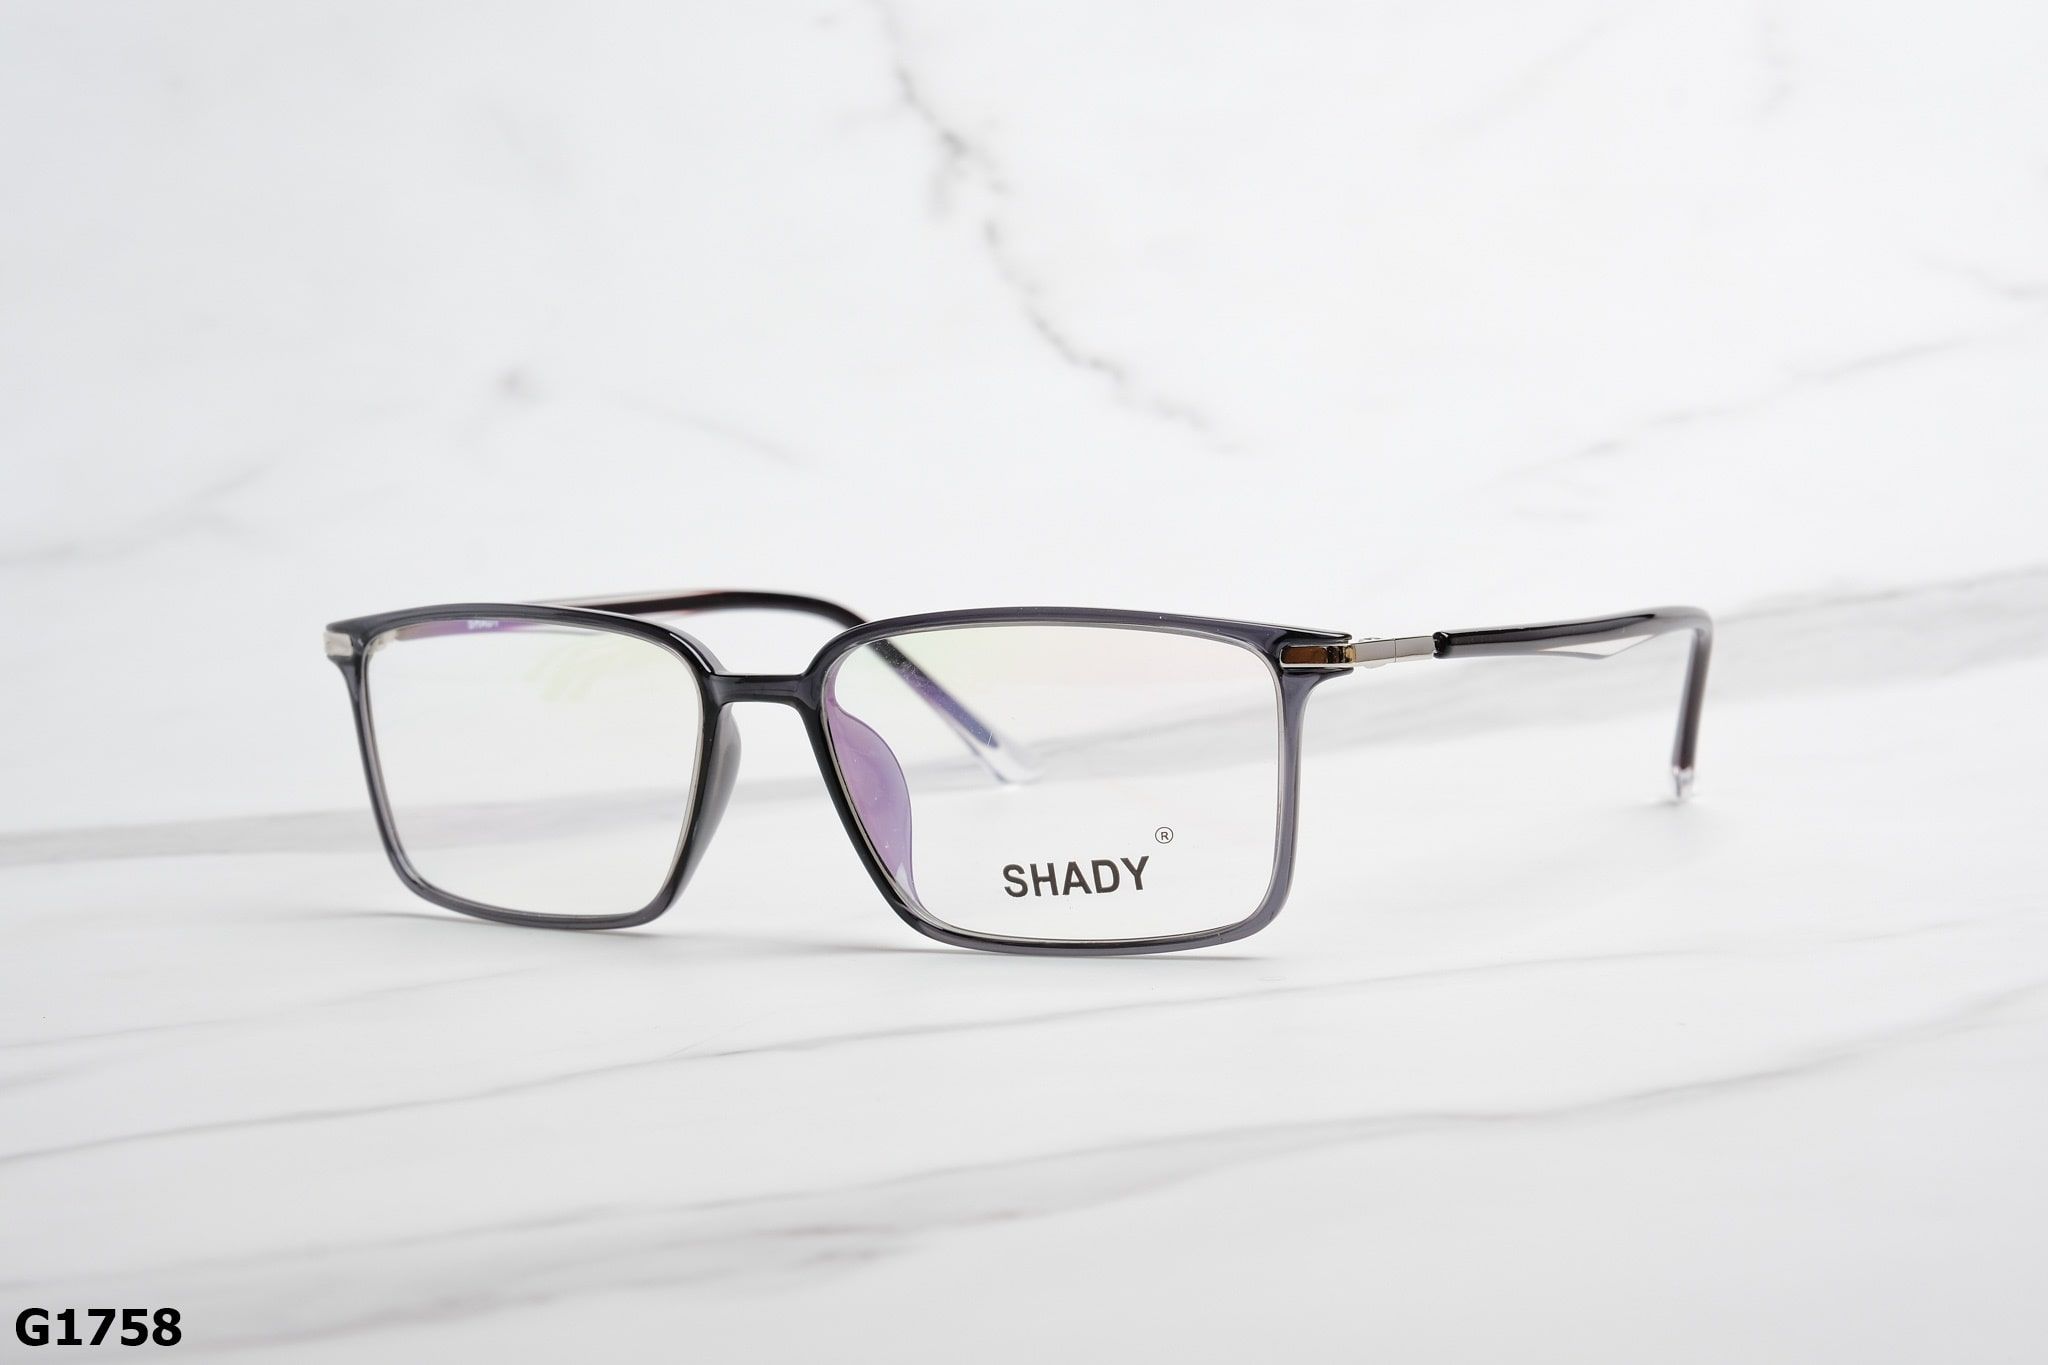  SHADY Eyewear - Glasses - G1758 